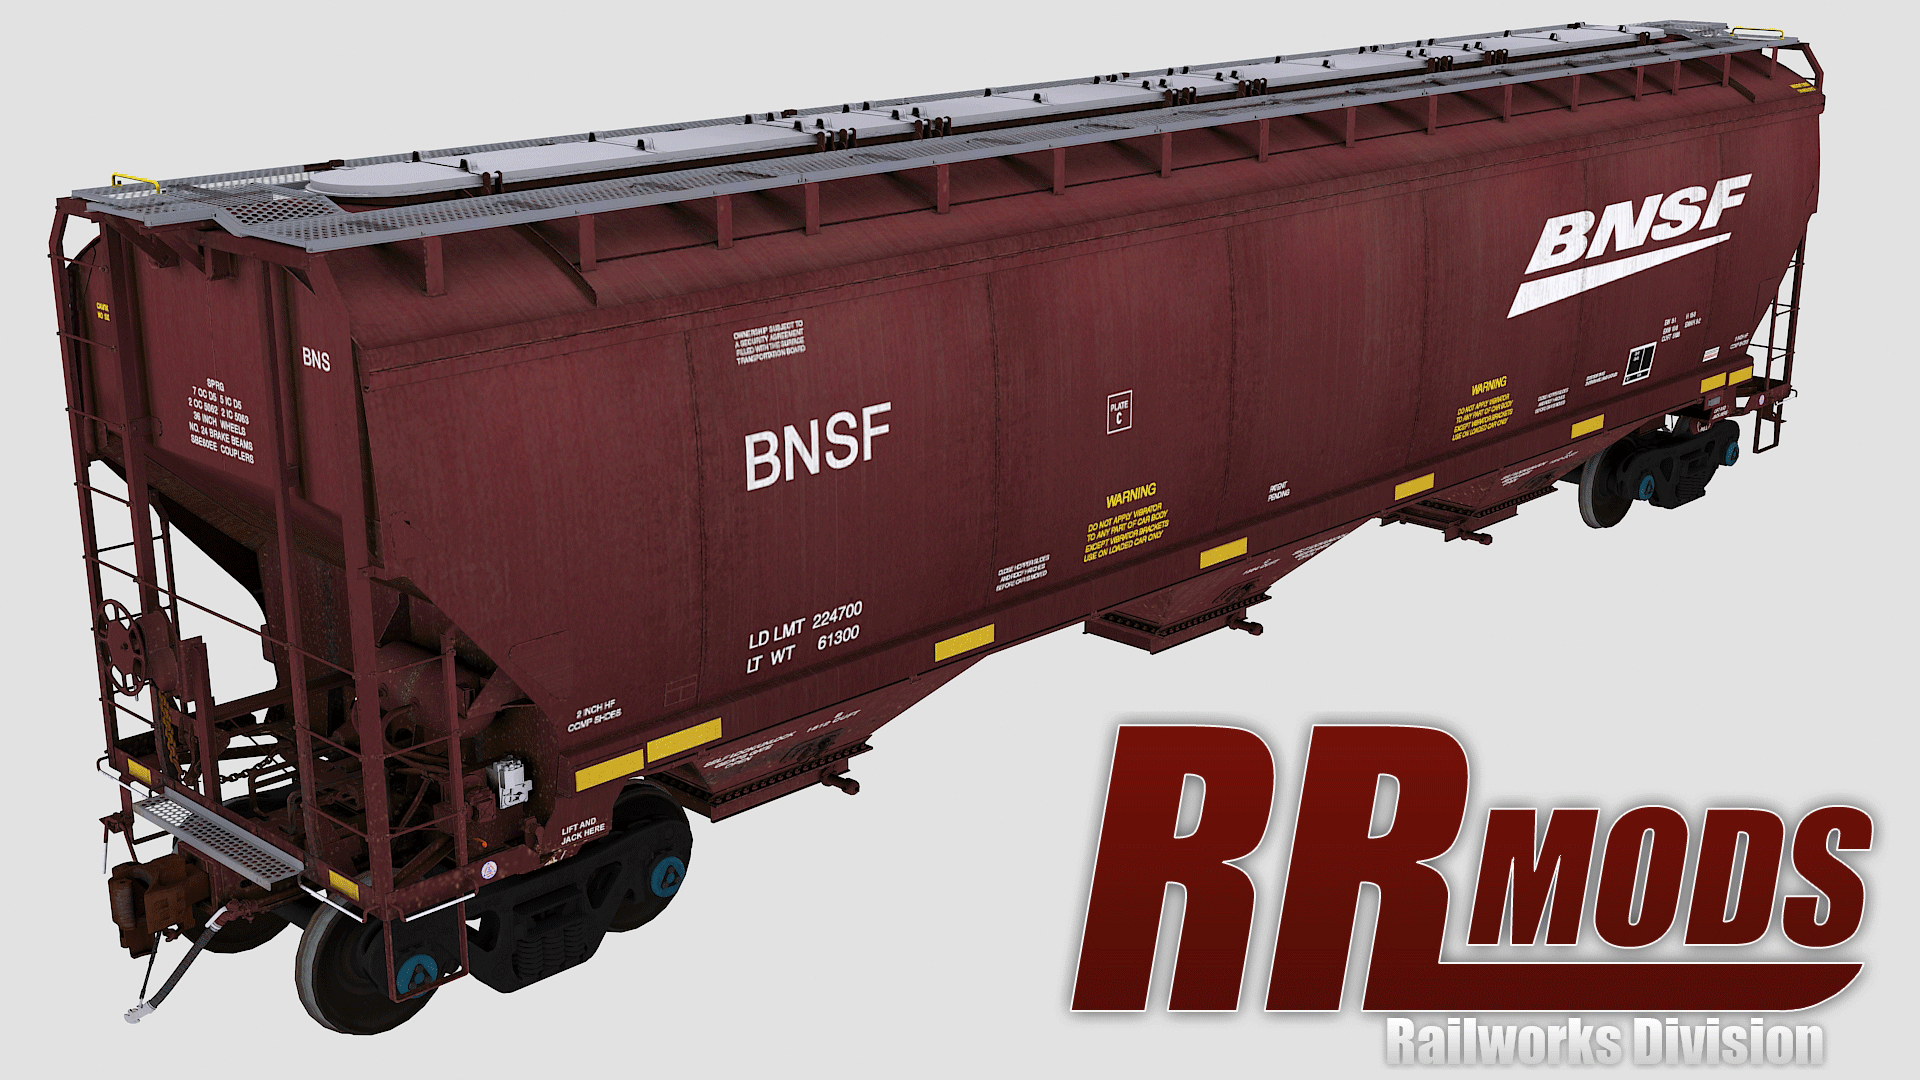 Bnsf belongs to RRMODS company